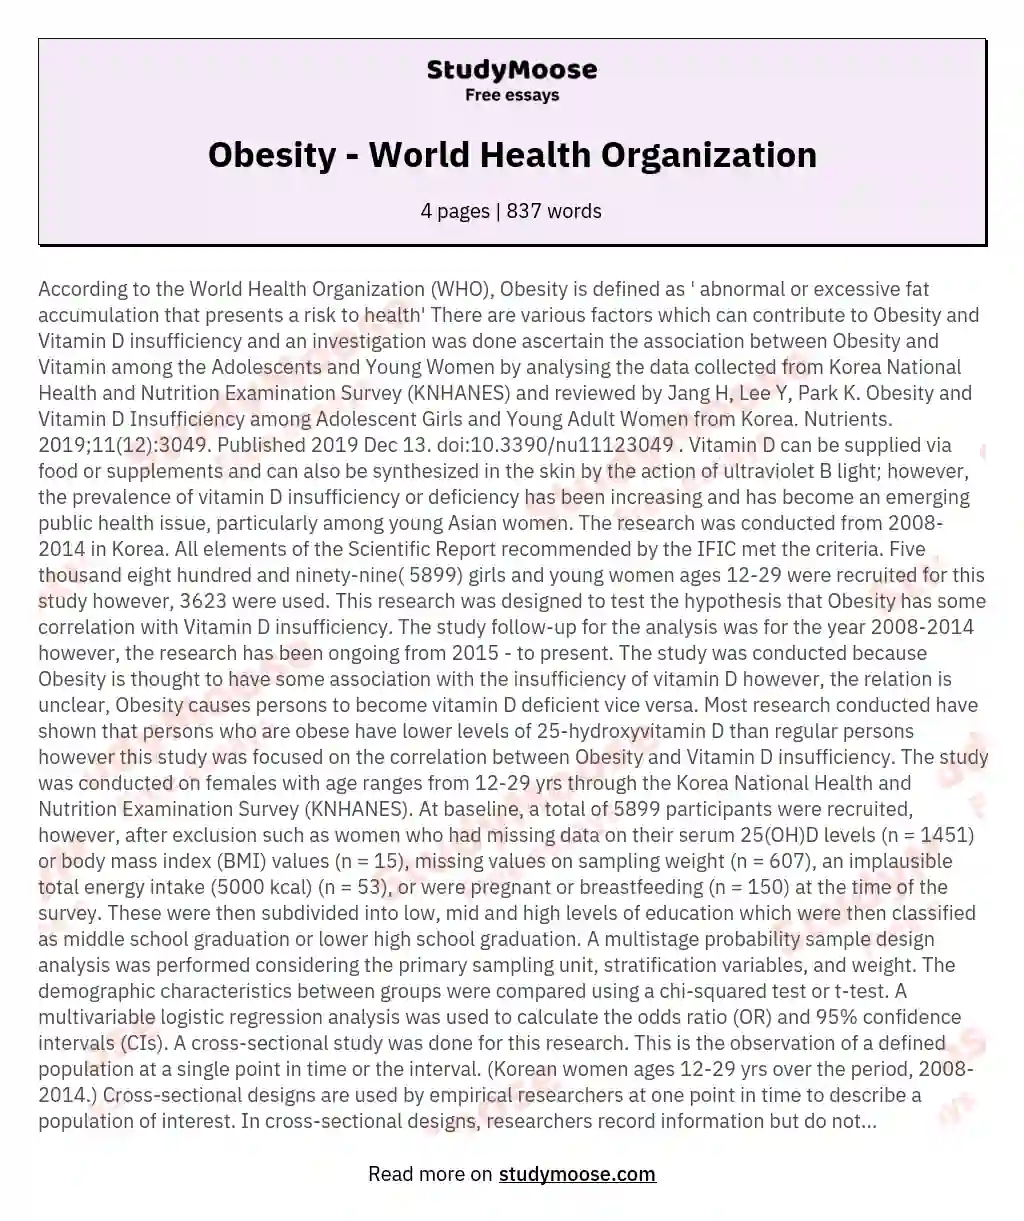 Obesity - World Health Organization essay